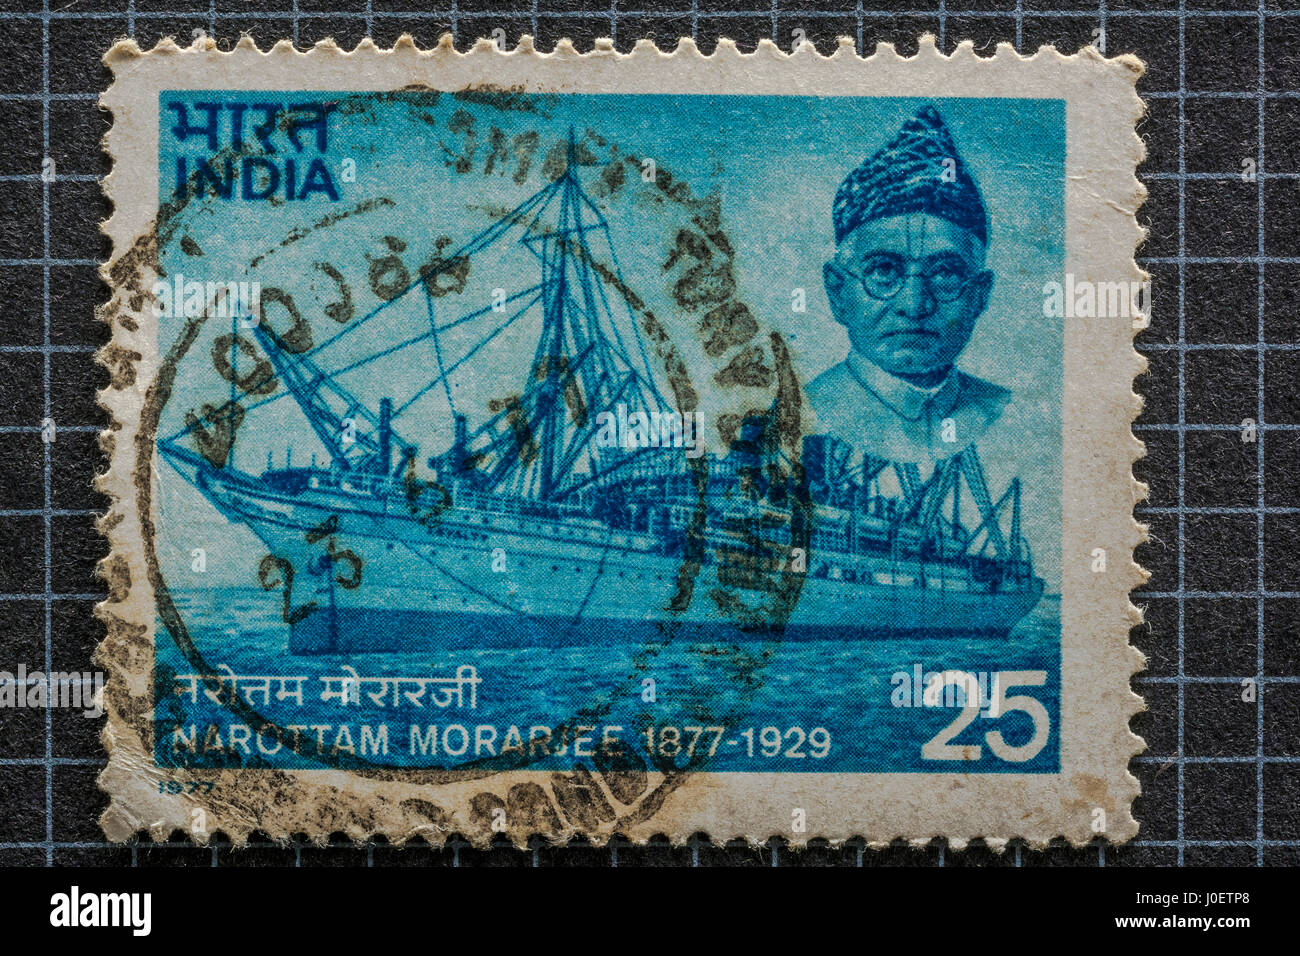 Narottam morarjee, postage stamps, india, asia Stock Photo